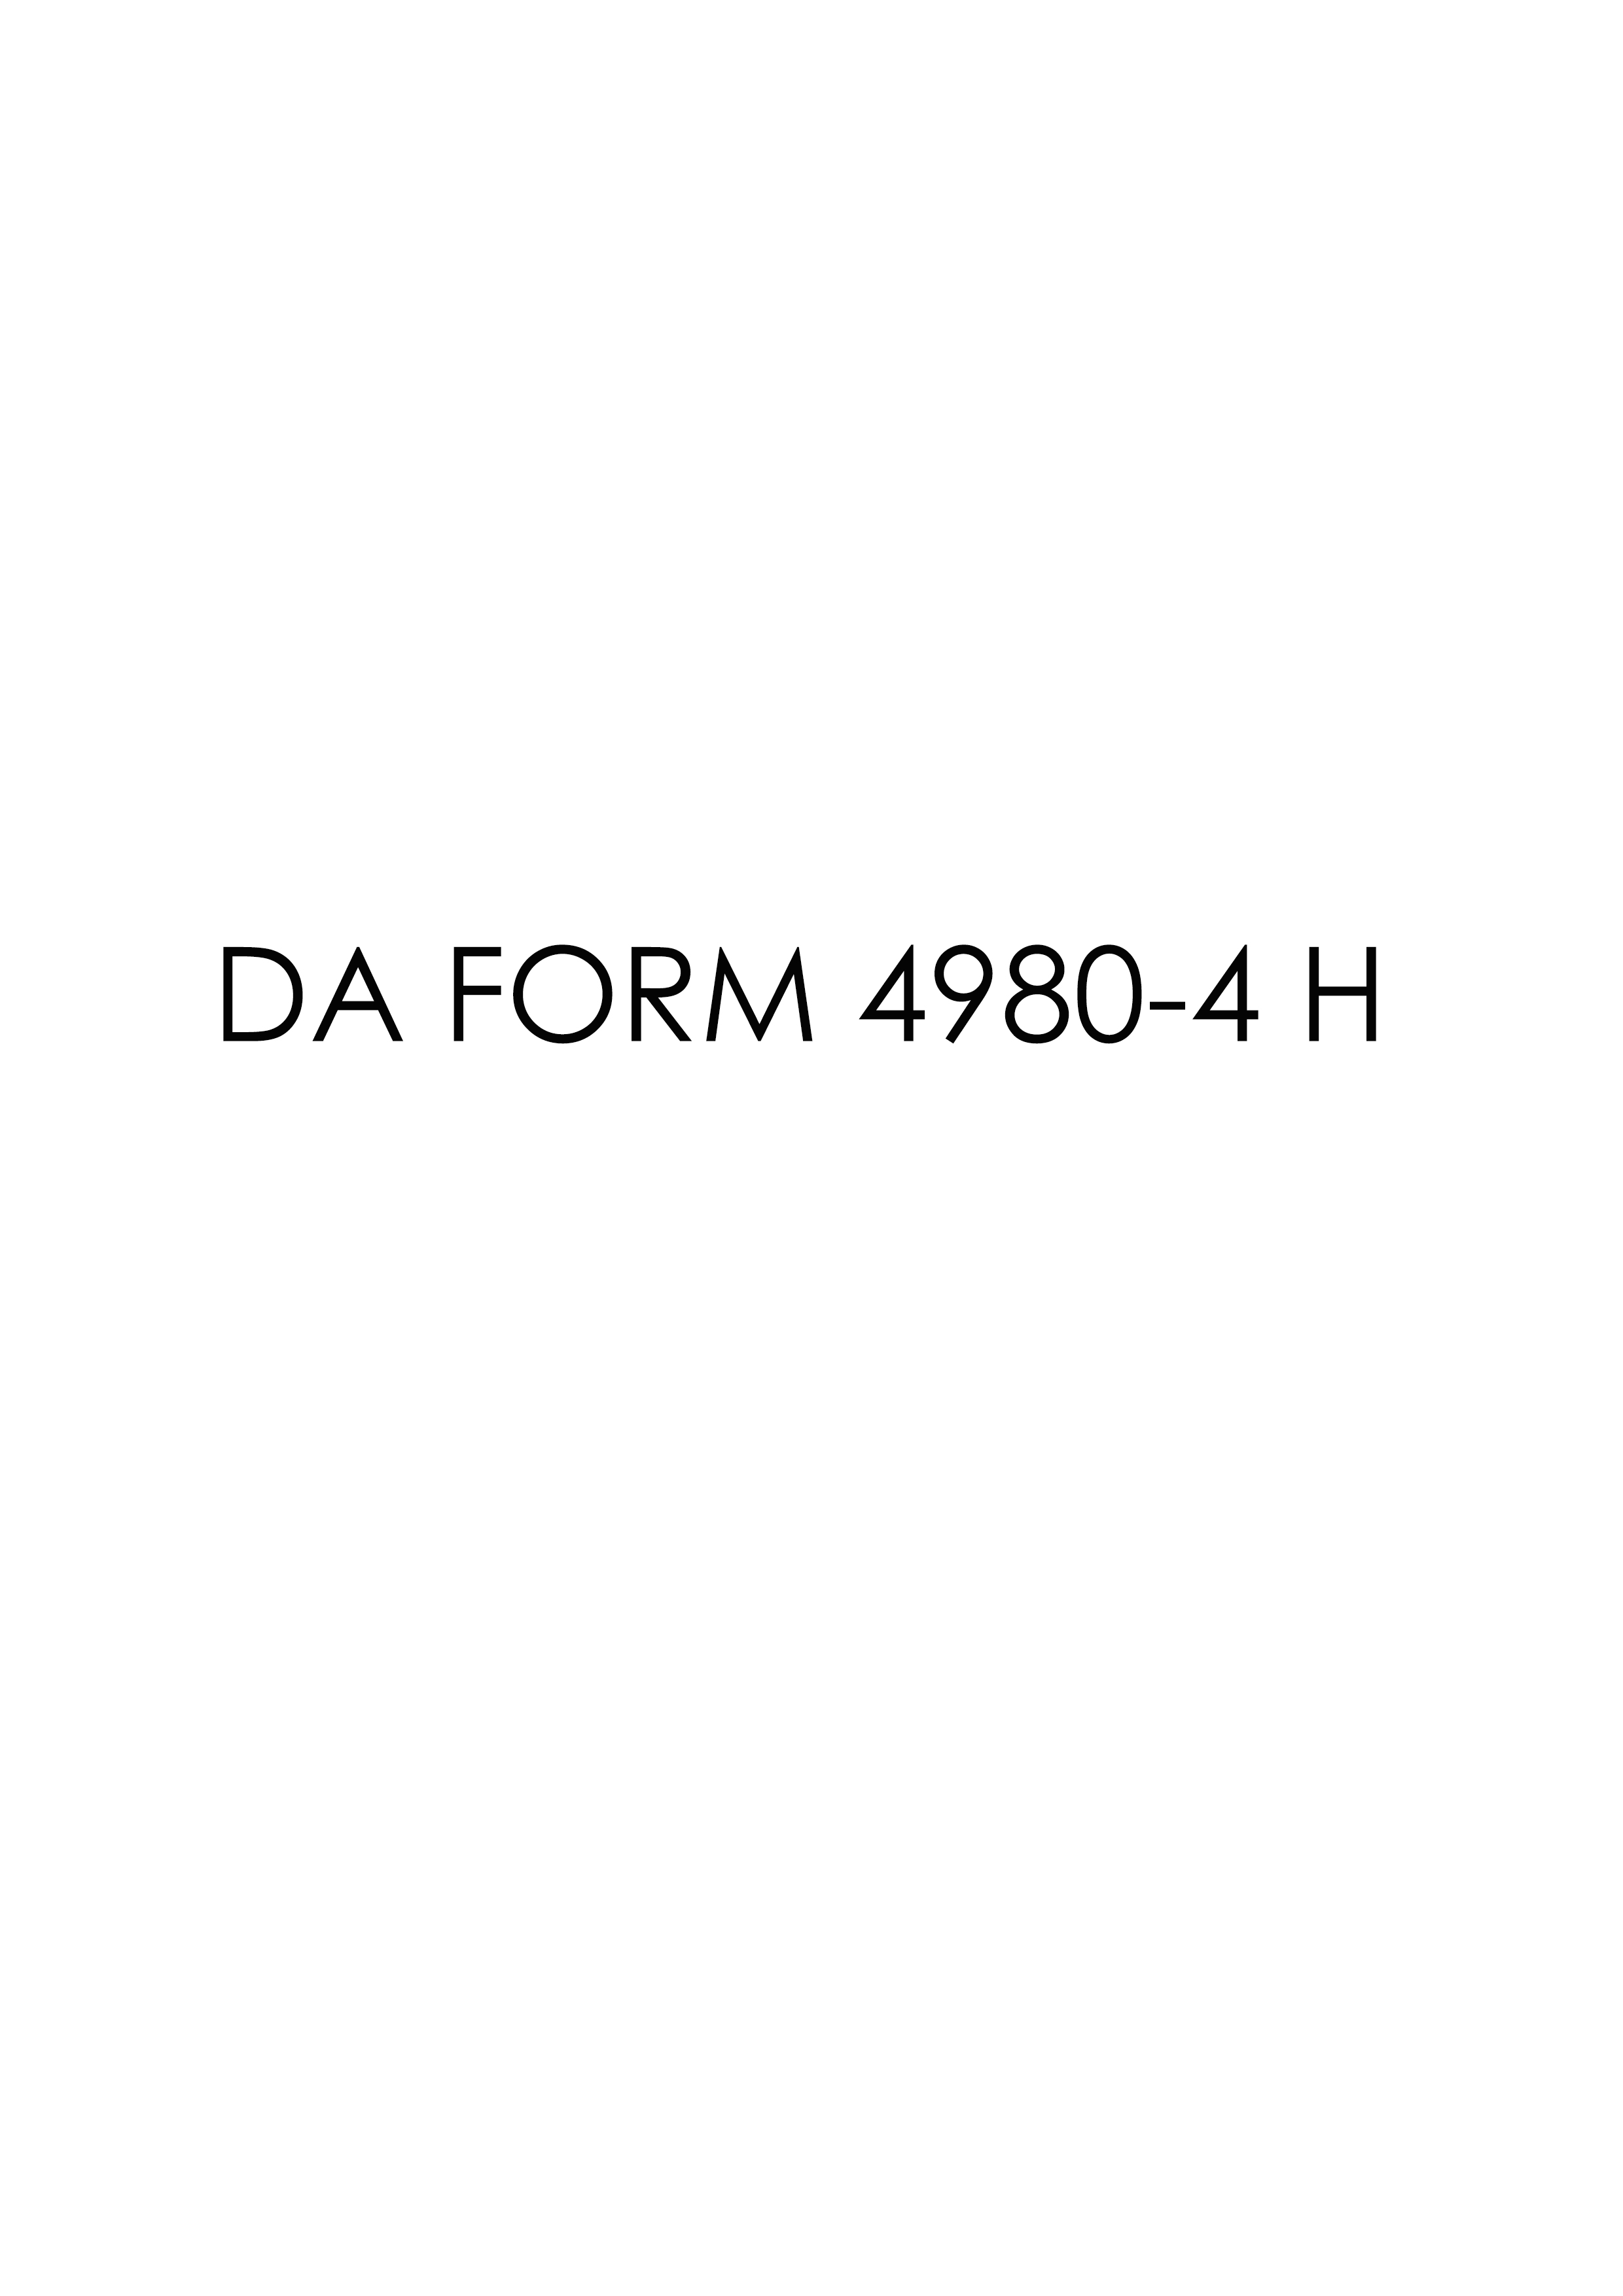 da Form 4980-4 H fillable